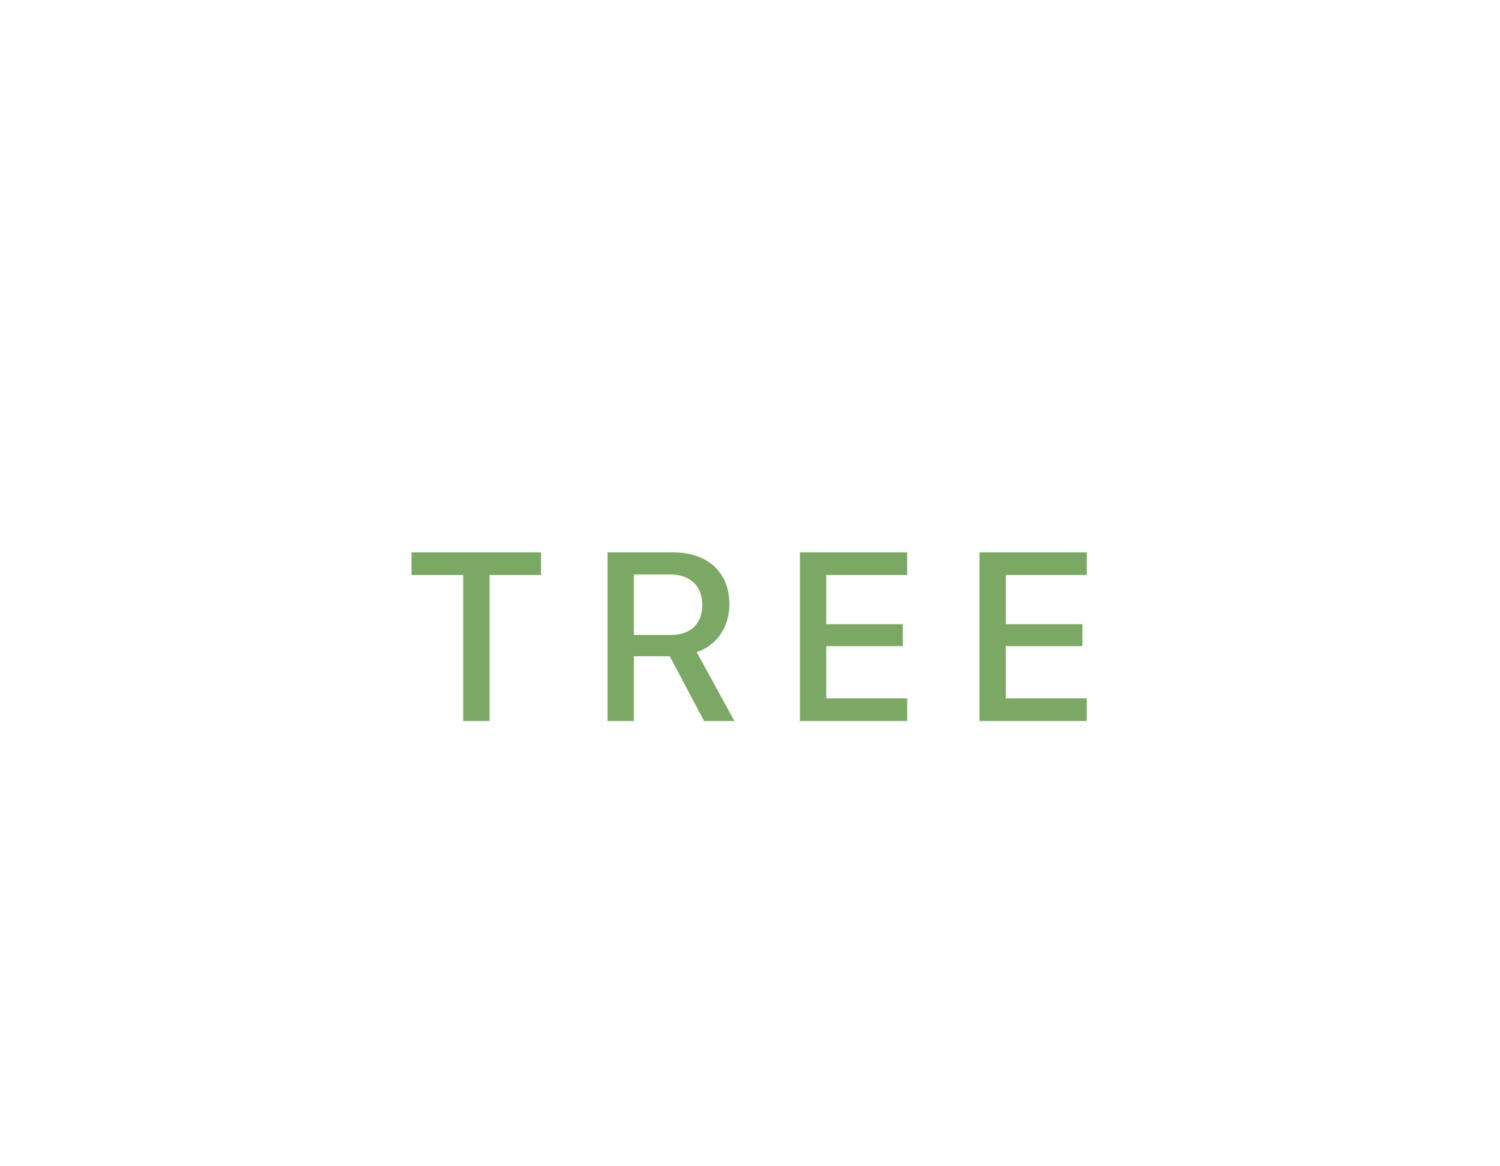 Wood street studio